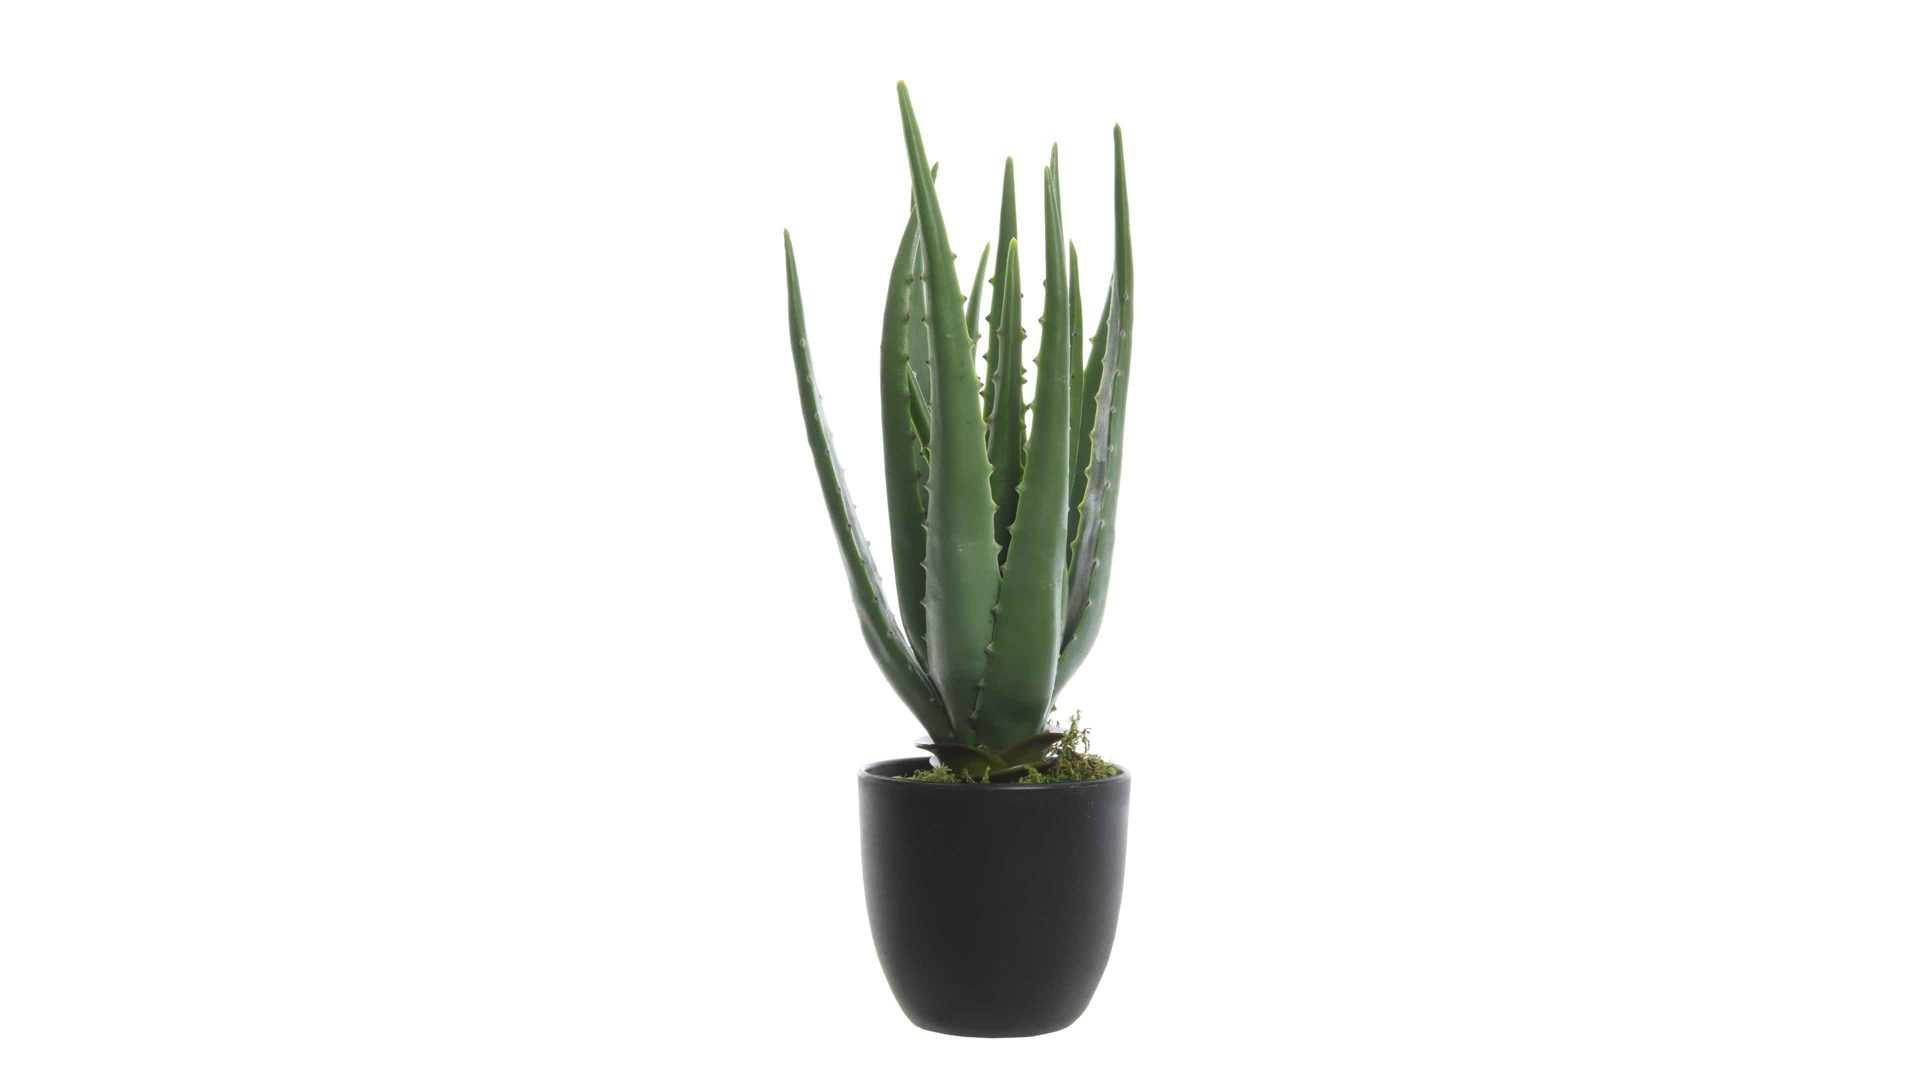 Pflanze Kaemingk aus Kunststoff in Dunkelgrün Aloe Vera im Topf dunkelgrüner & schwarzer Kunststoff - Höhe ca. 35 cm